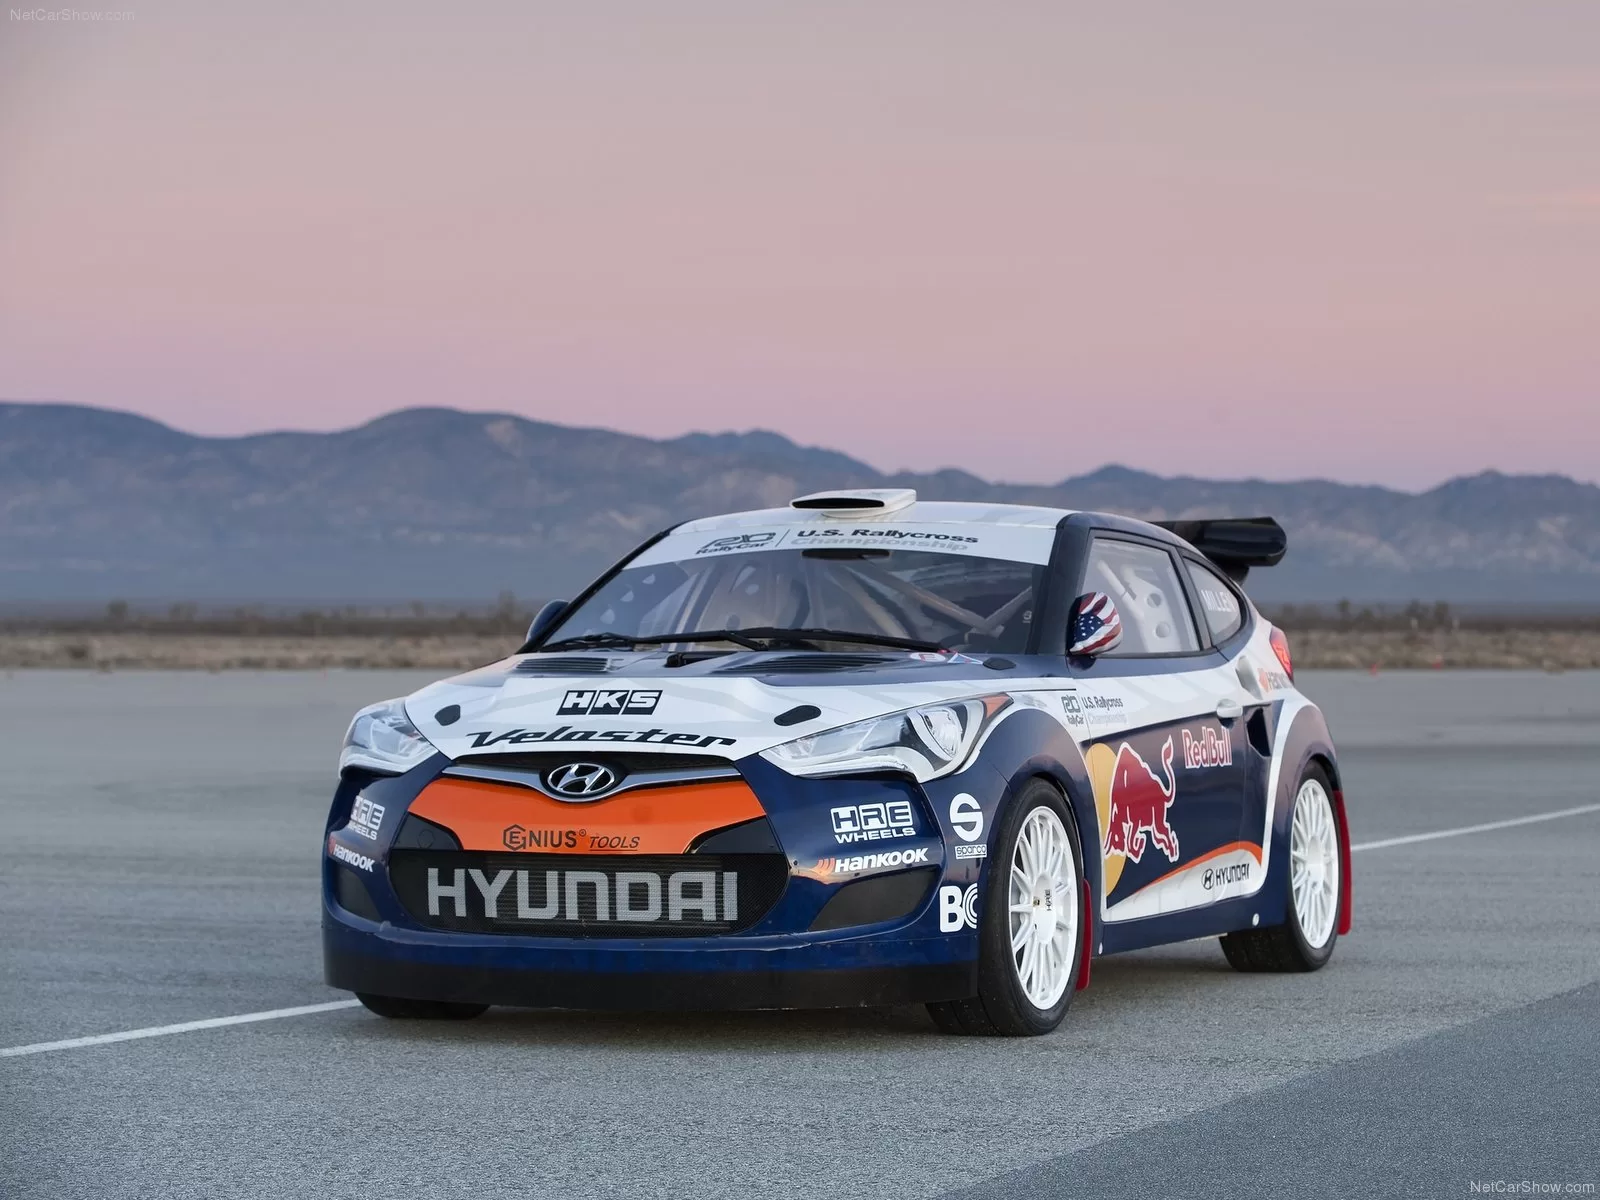 Hyundai Veloster Rally car – The Surprisingly Unique插图